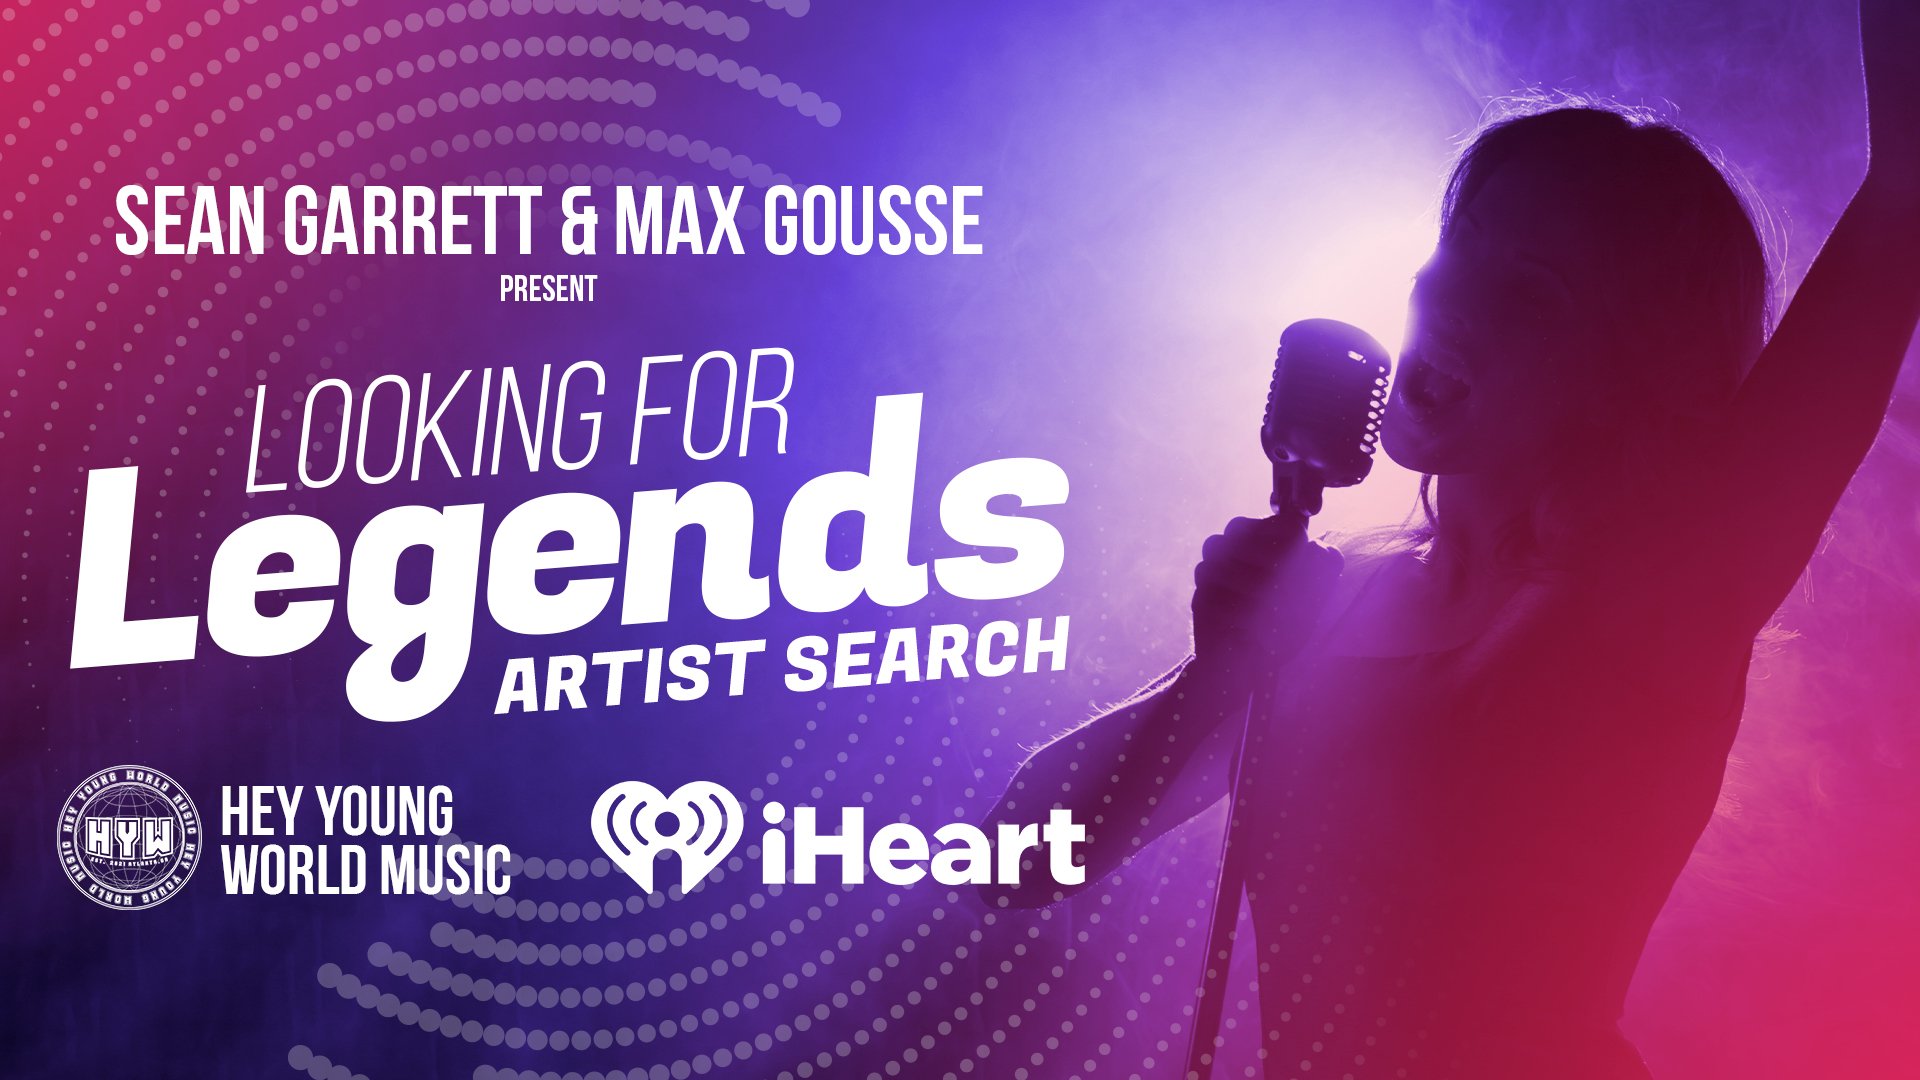 Sean Garrett & Max Gousse Present: Looking for Legends Artist Search